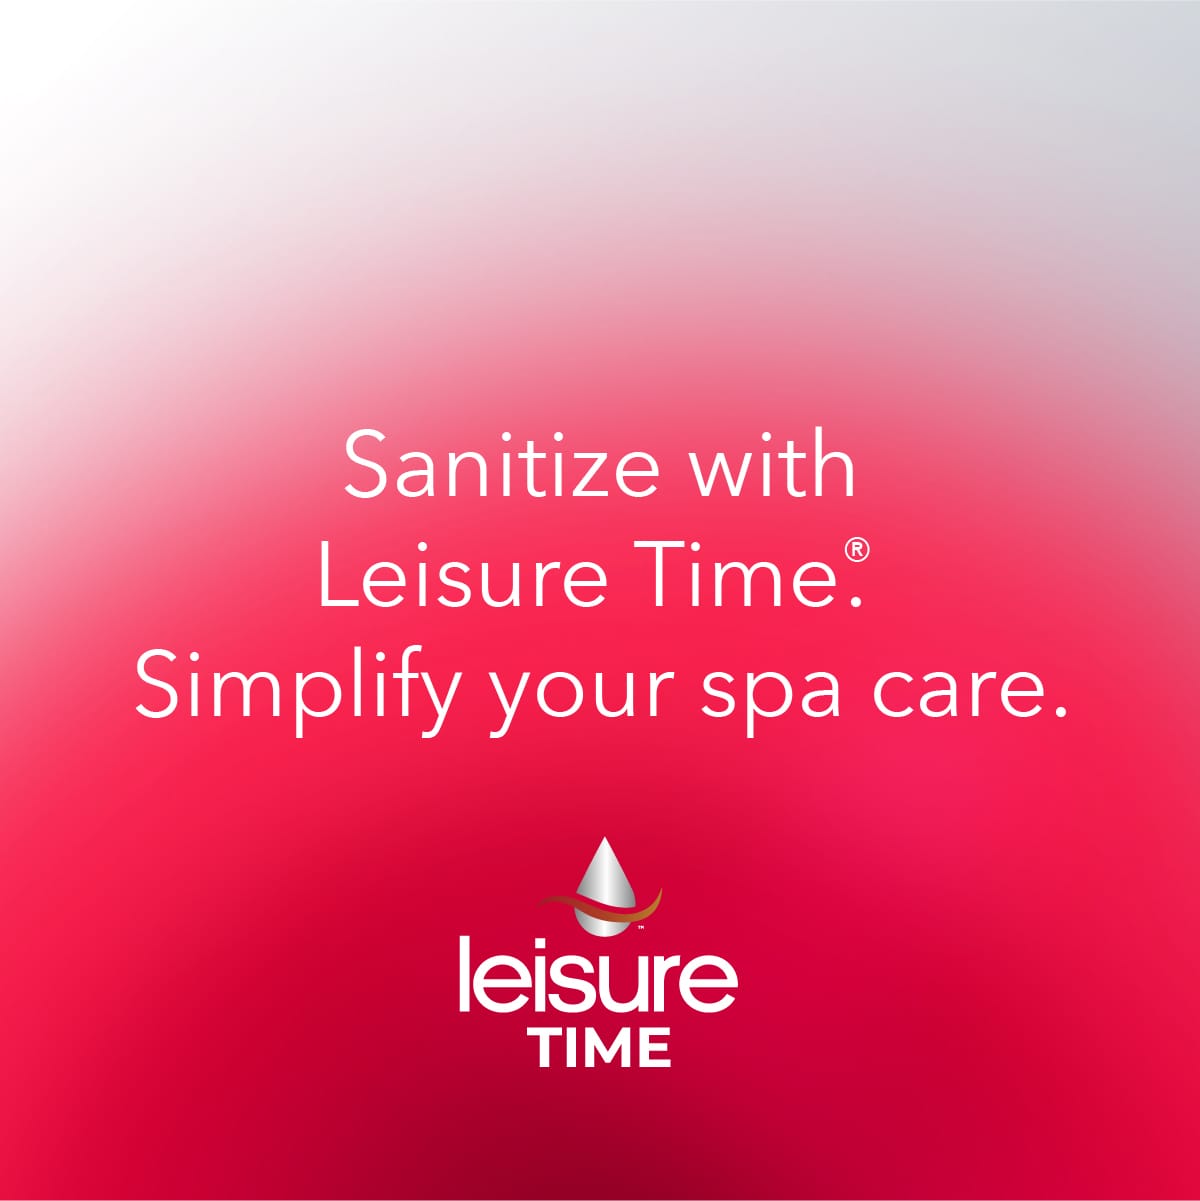 leisure time sanitize